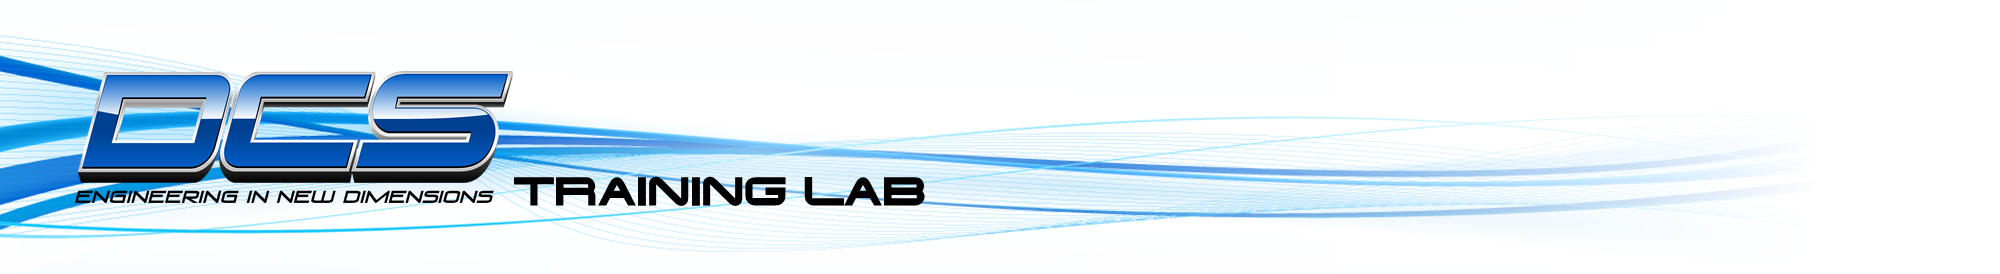 training-lab-logo-1